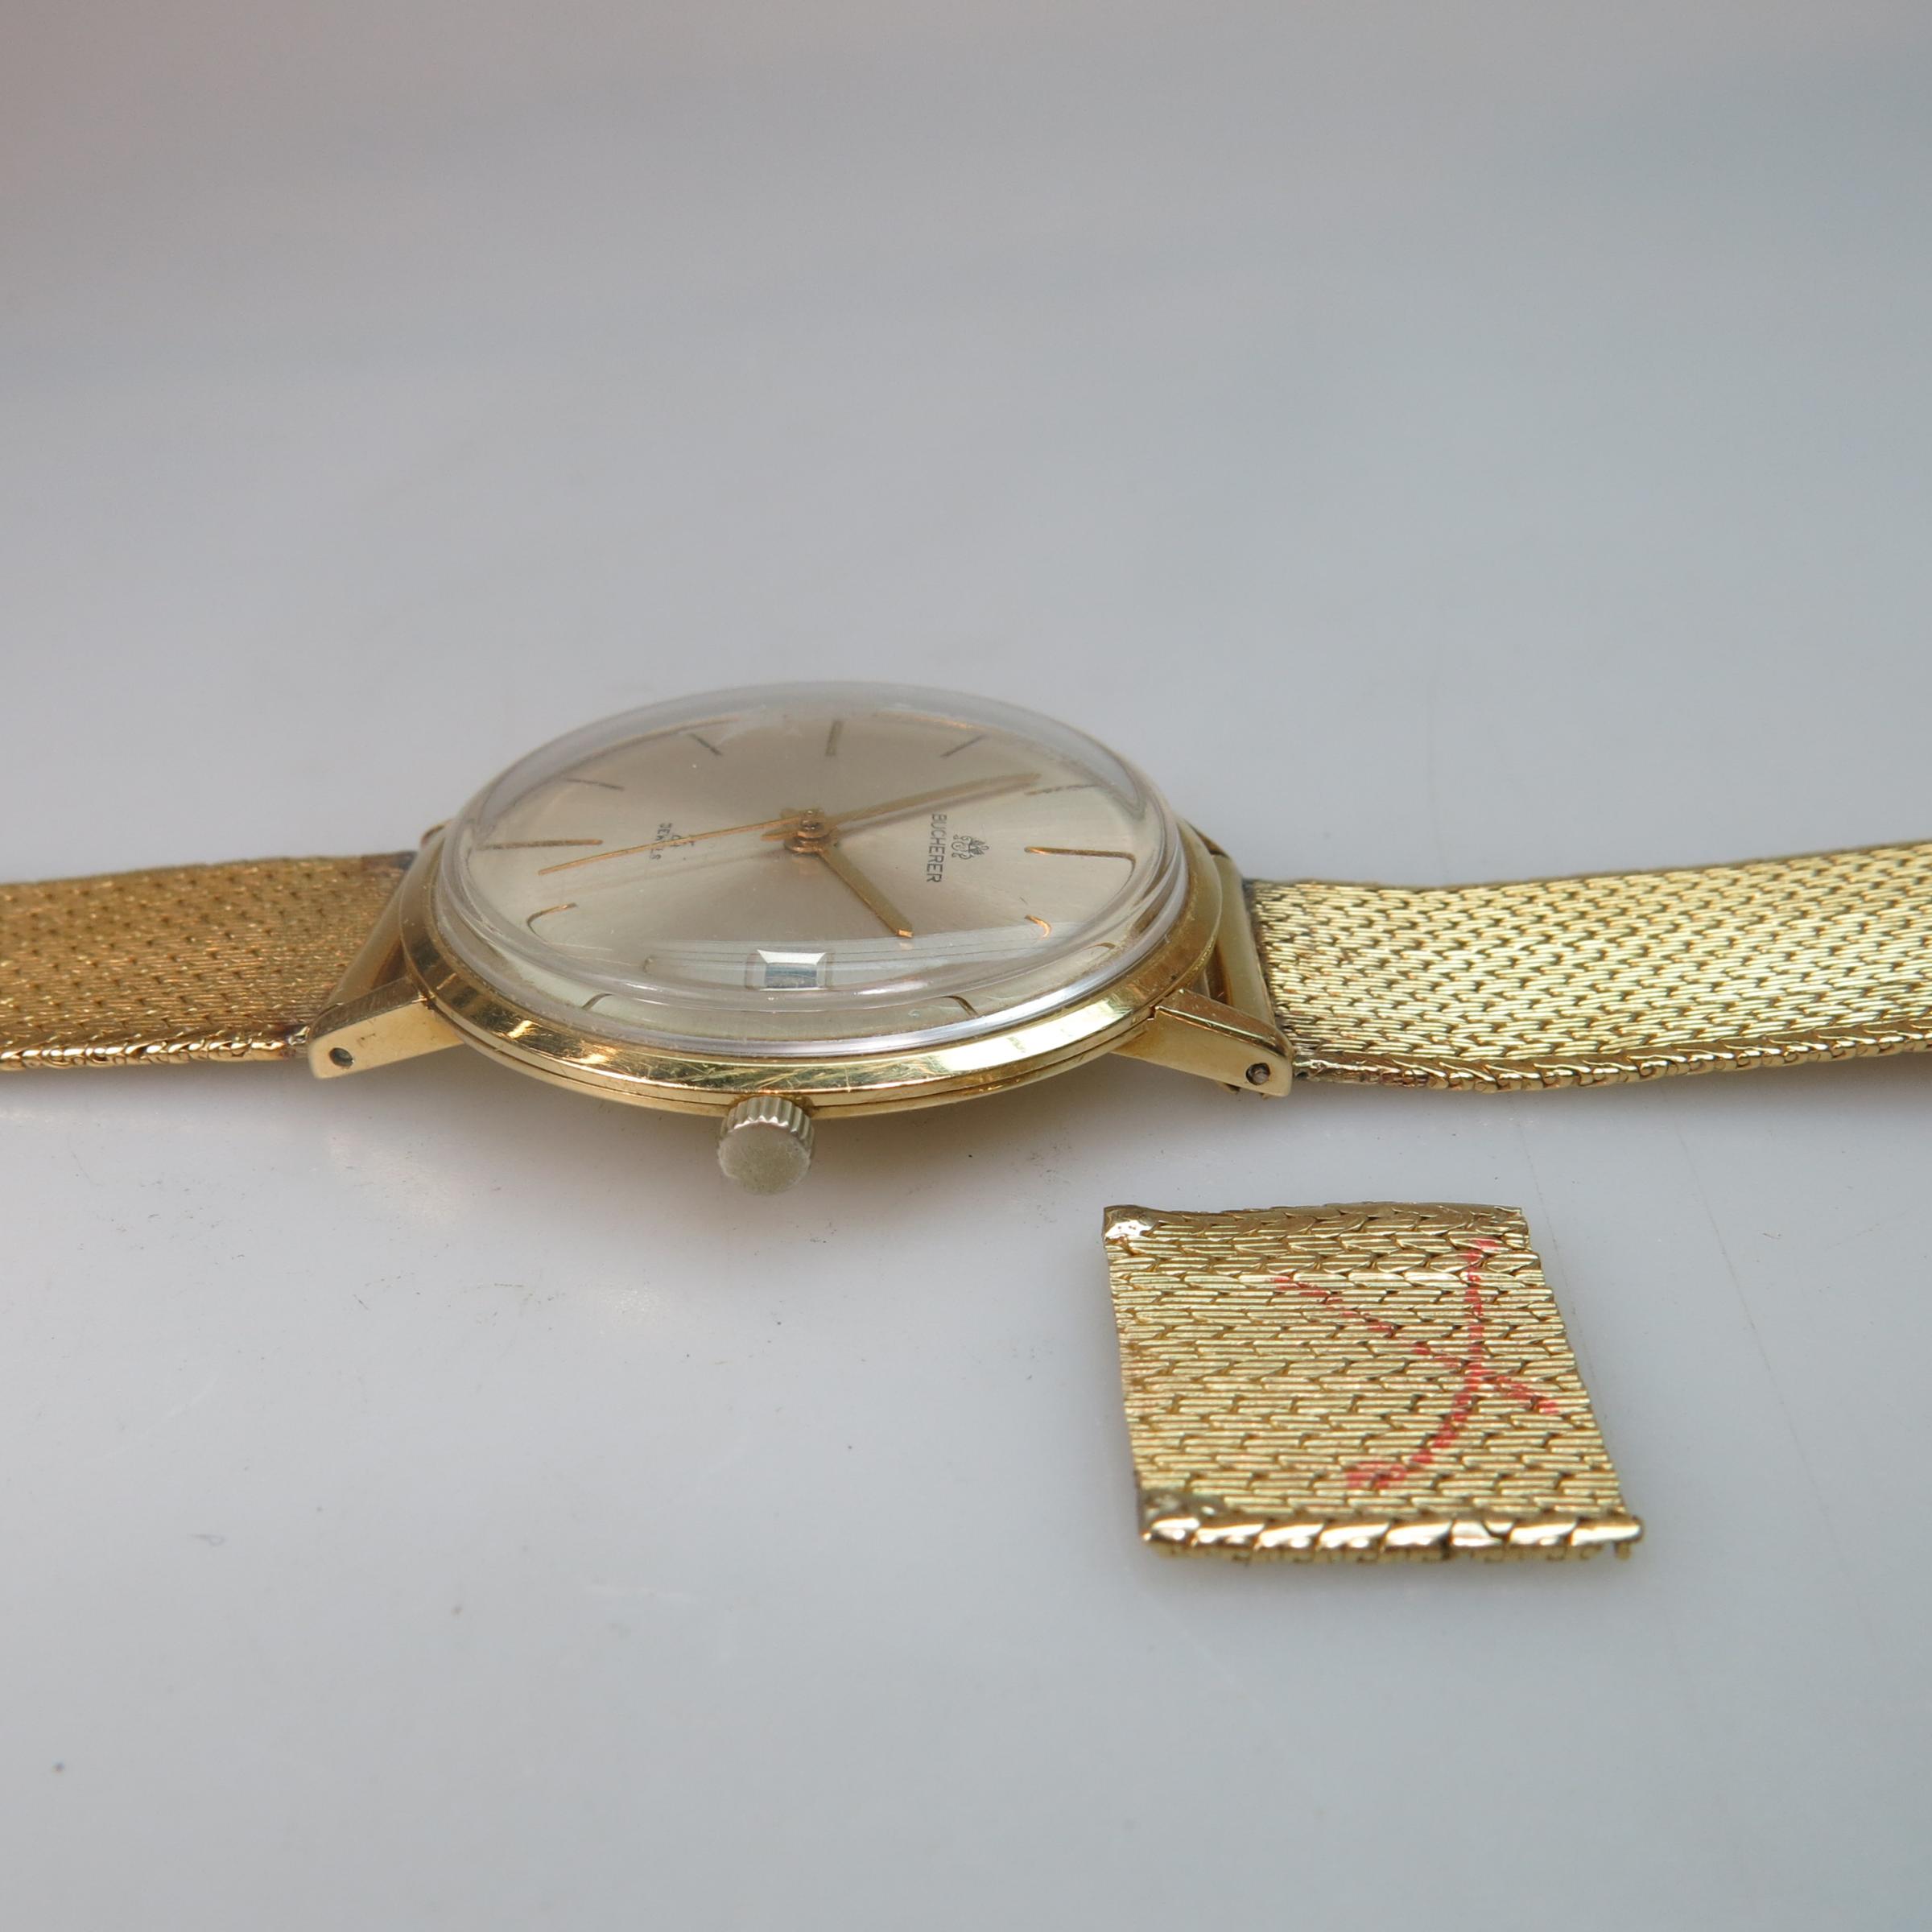 Bucherer Wristwatch, With Date